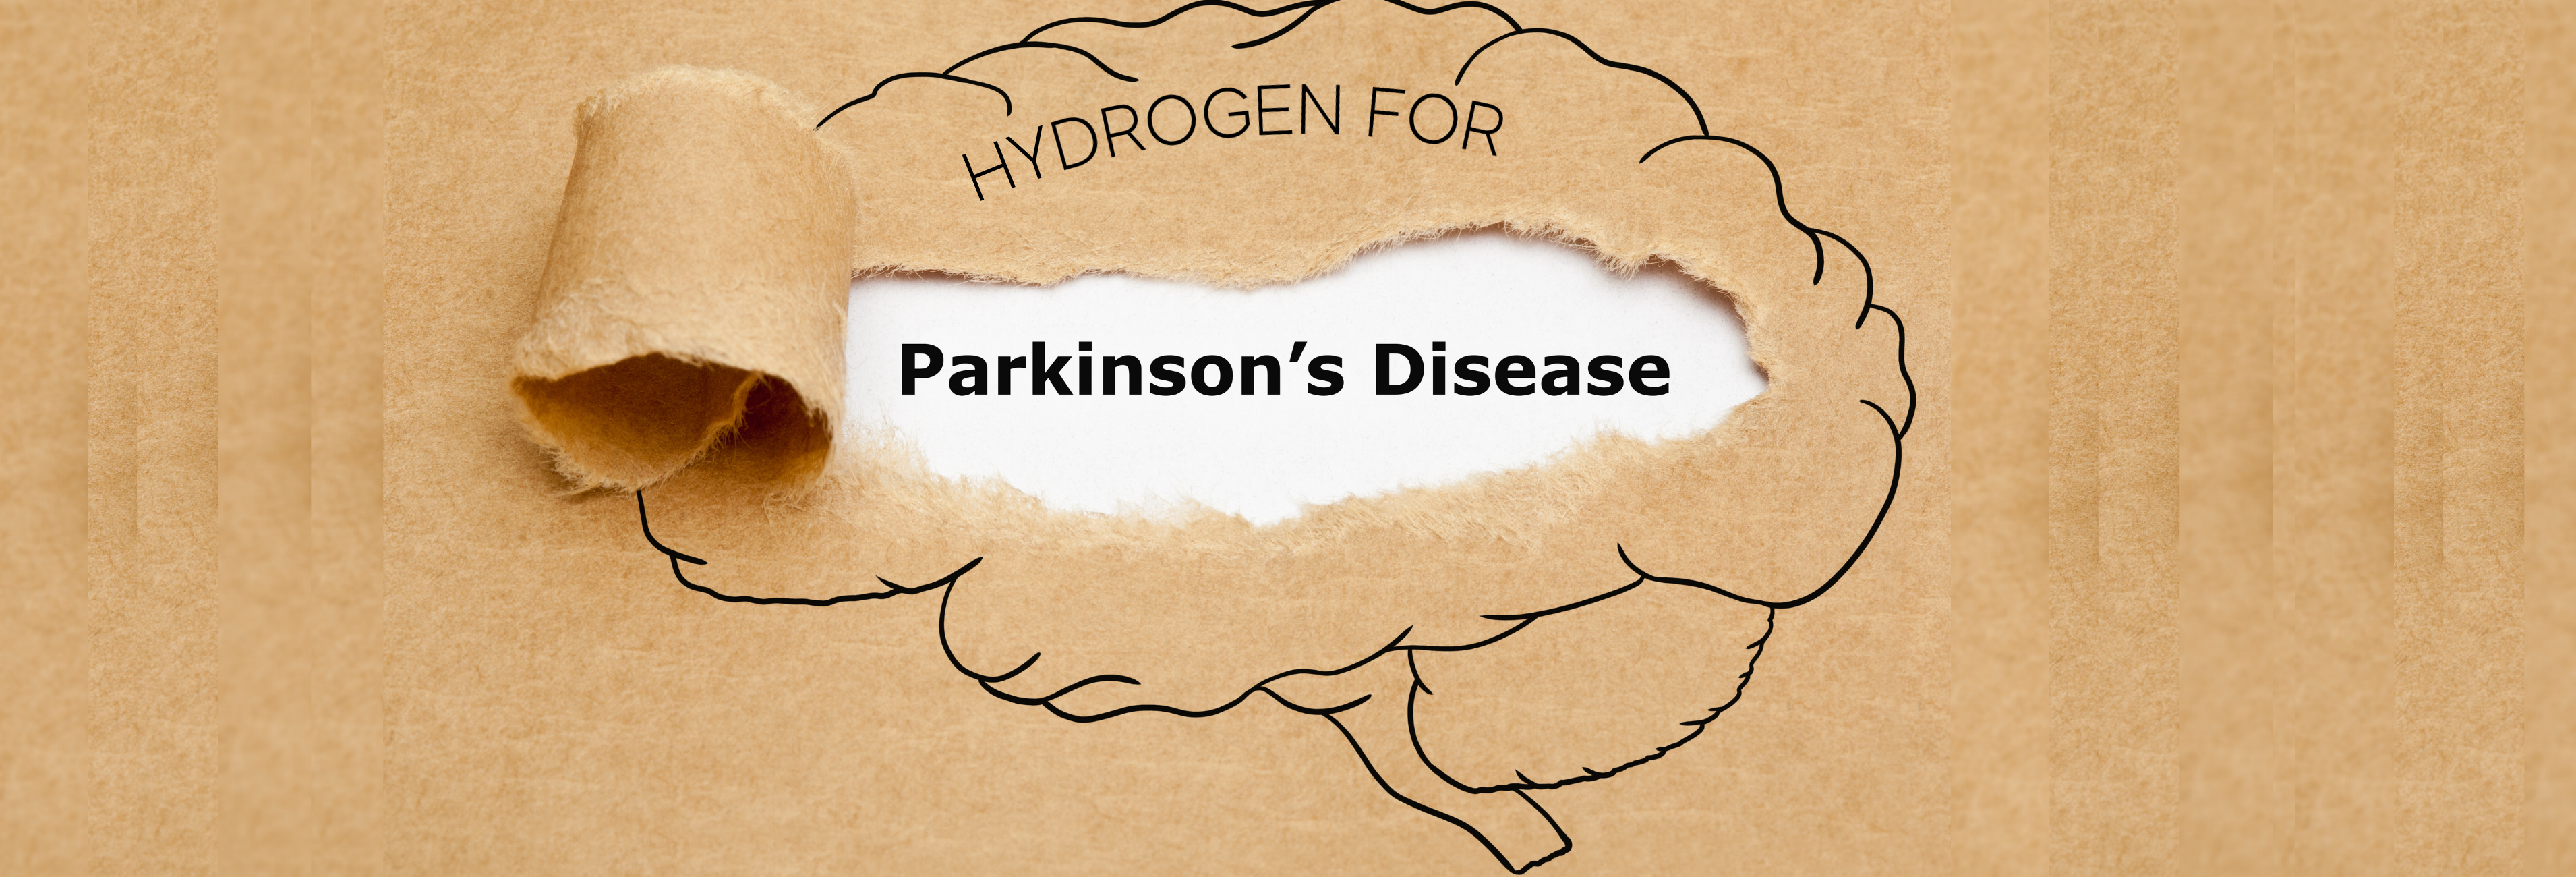 Hydrogen water benefits for Parkinson's Disease.